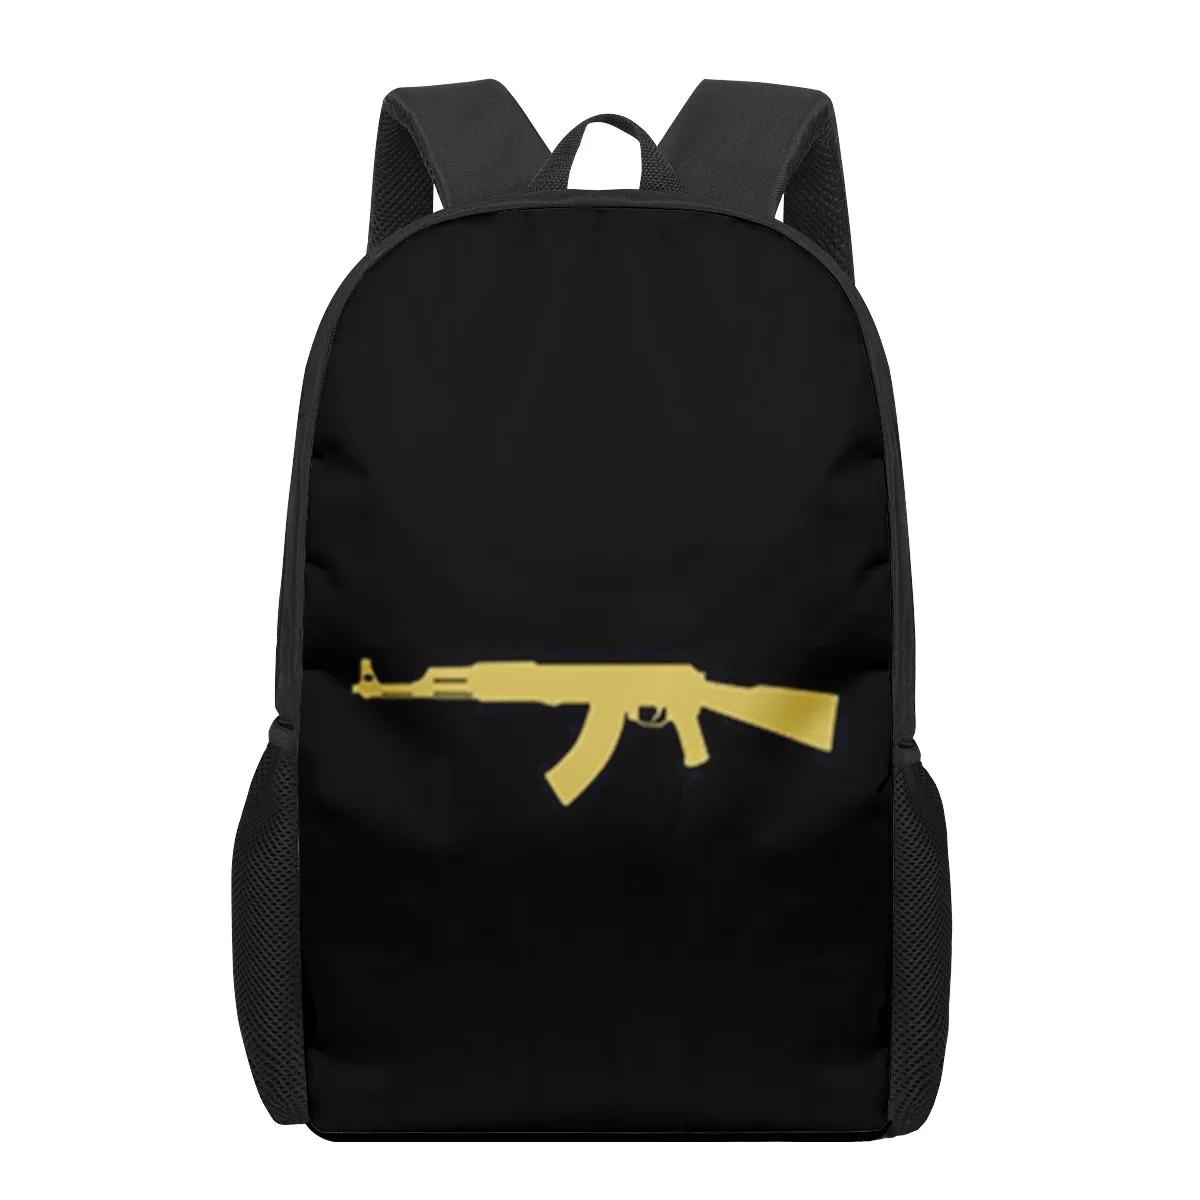 AK47 Handgun BUllets 3D Print School Backpack for Boys Girls Teenager Kids Book Bag Casual Shoulder Bags 16Inch Satchel Mochila